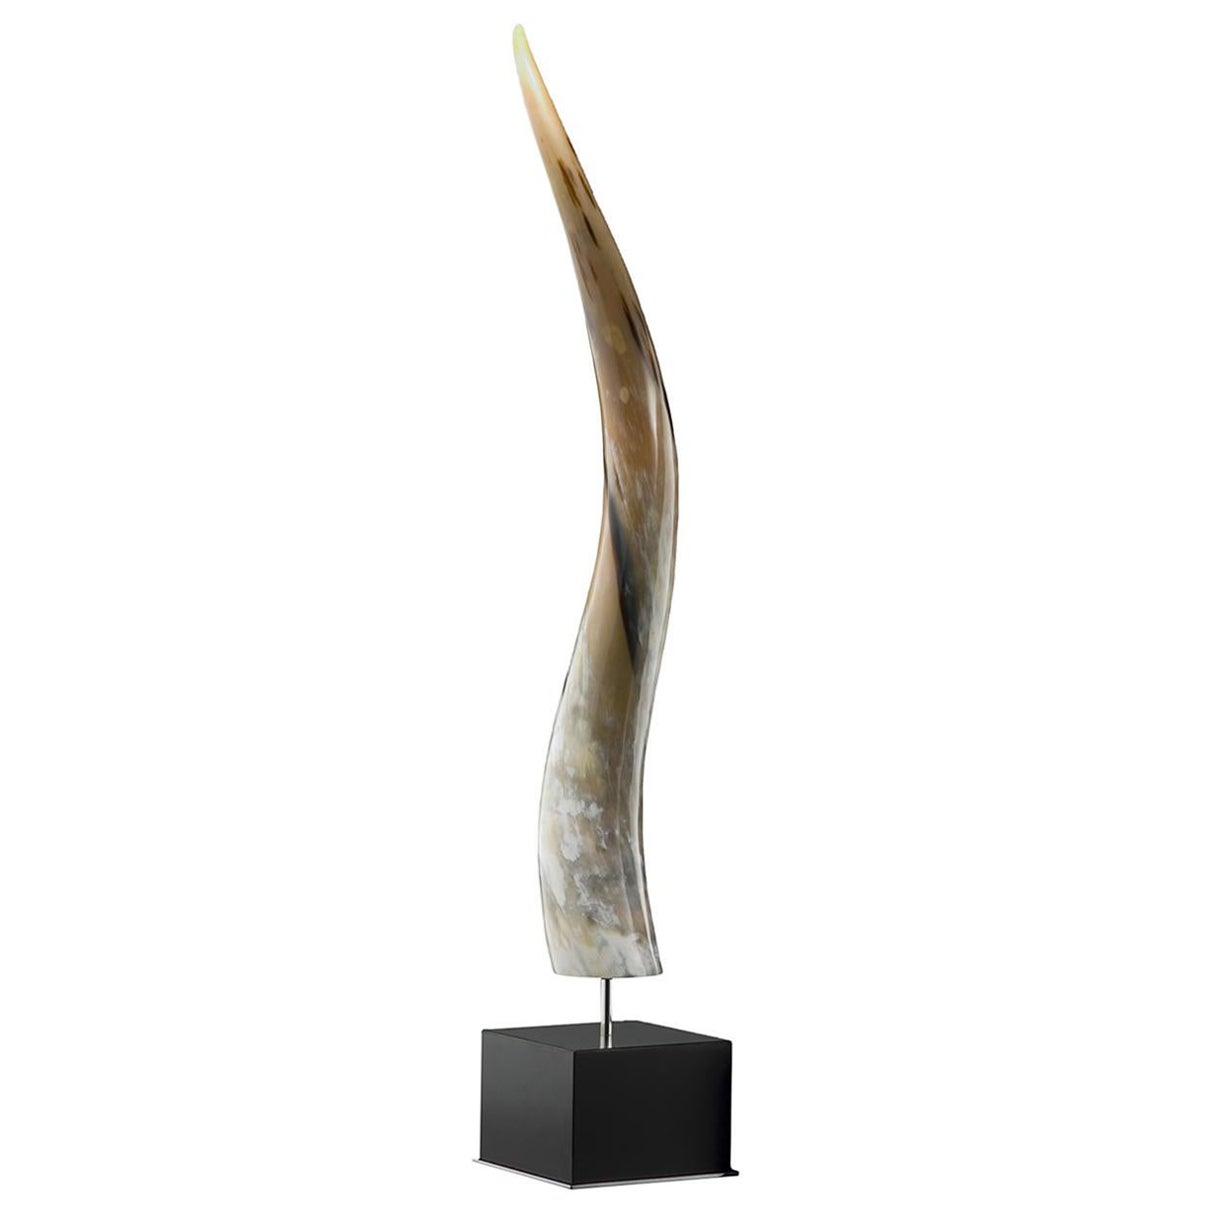 Leuca Horn Sculpture For Sale